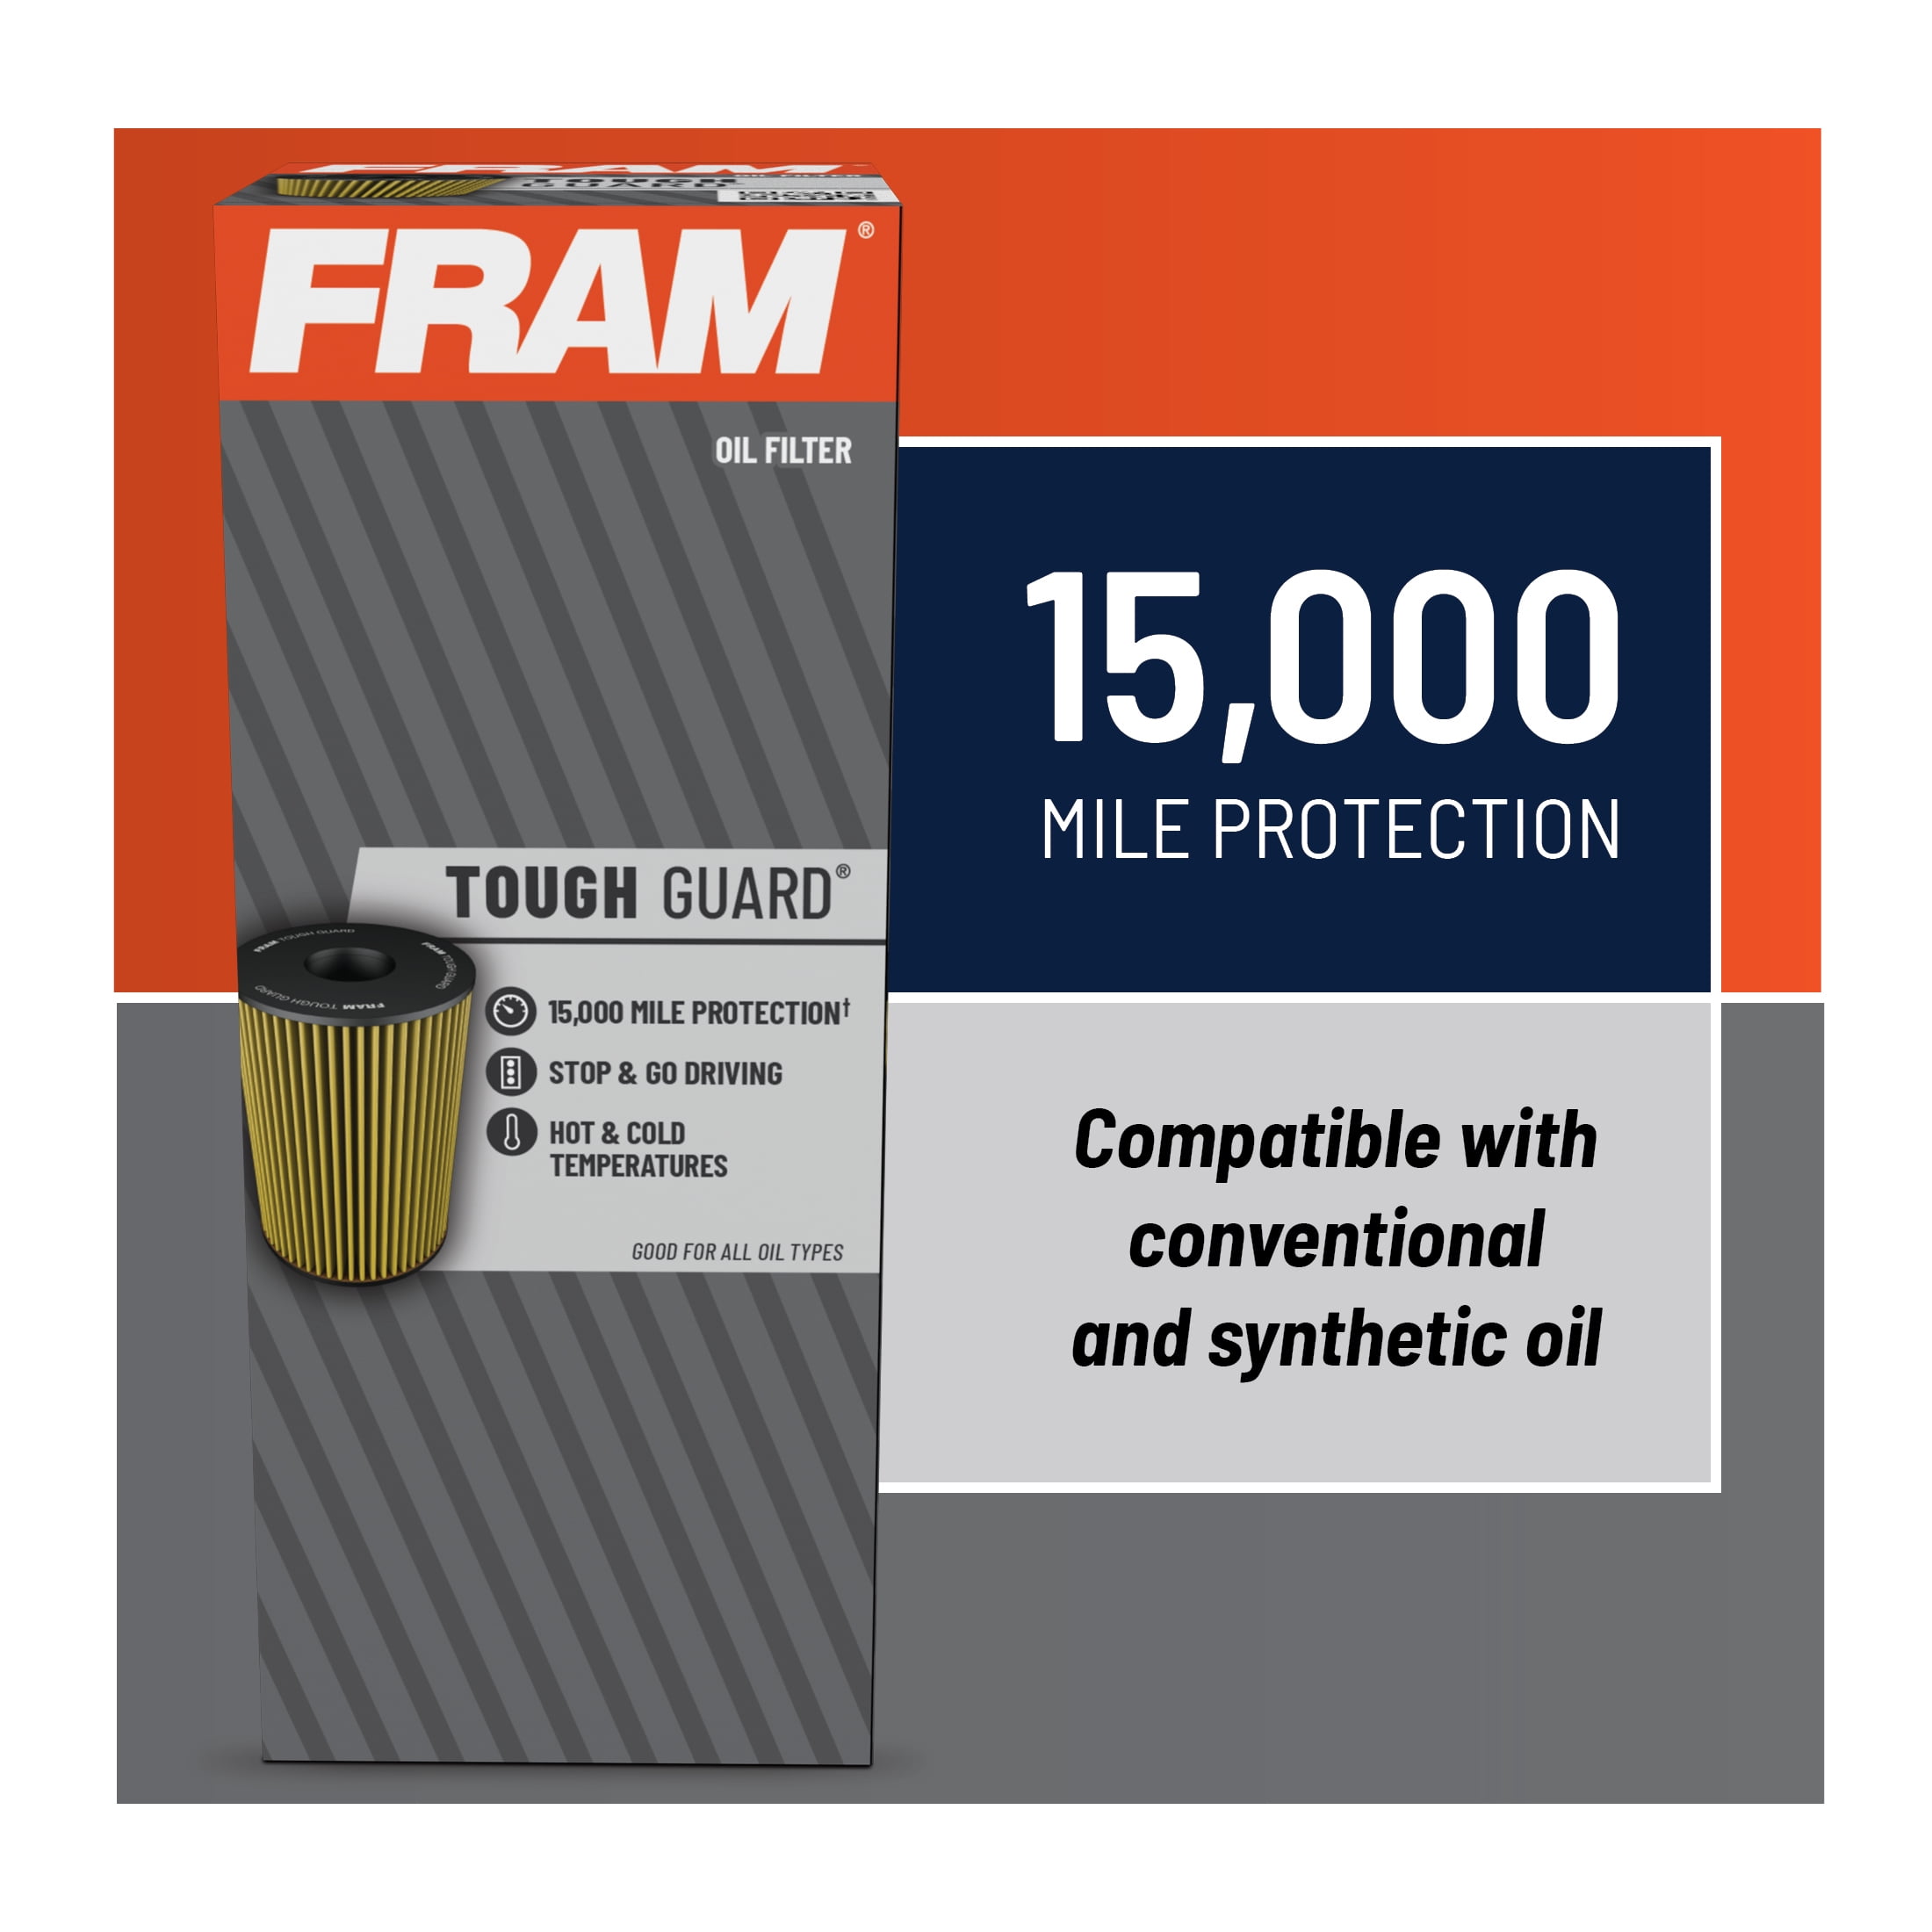 FRAM Tough Guard 15,000 Mile Protection Oil Filter, TG10515